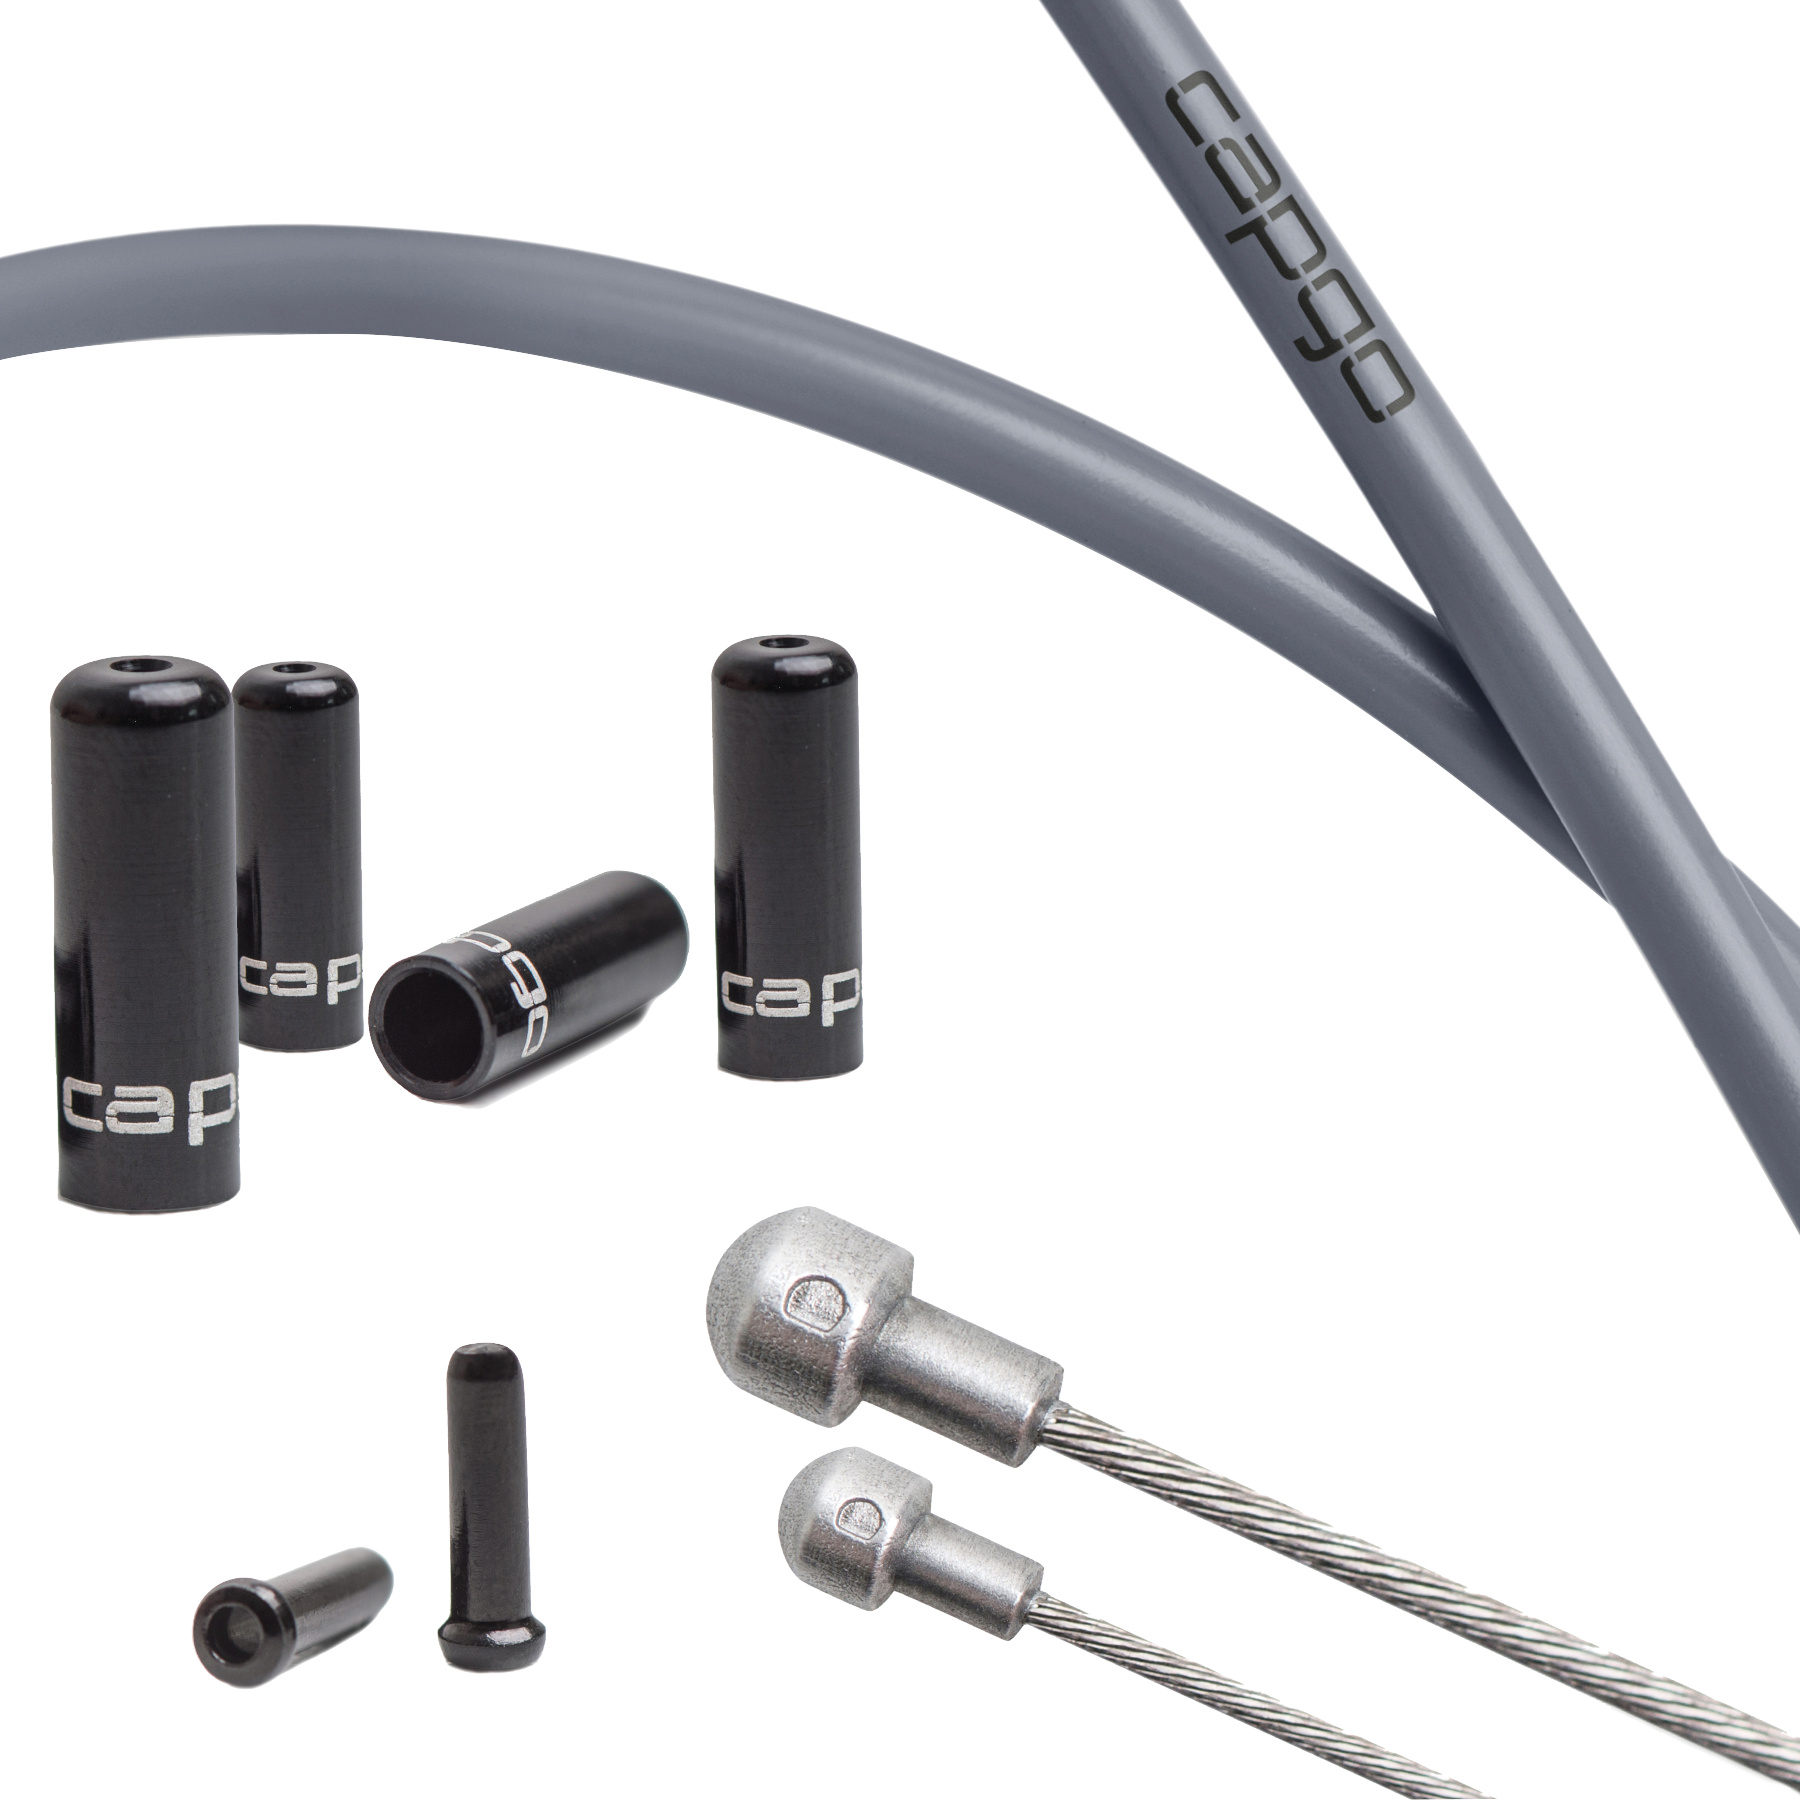 Productfoto van capgo Blue Line Brake Cable Set - Stainless Steel - PTFE - Shimano/SRAM Road - grey